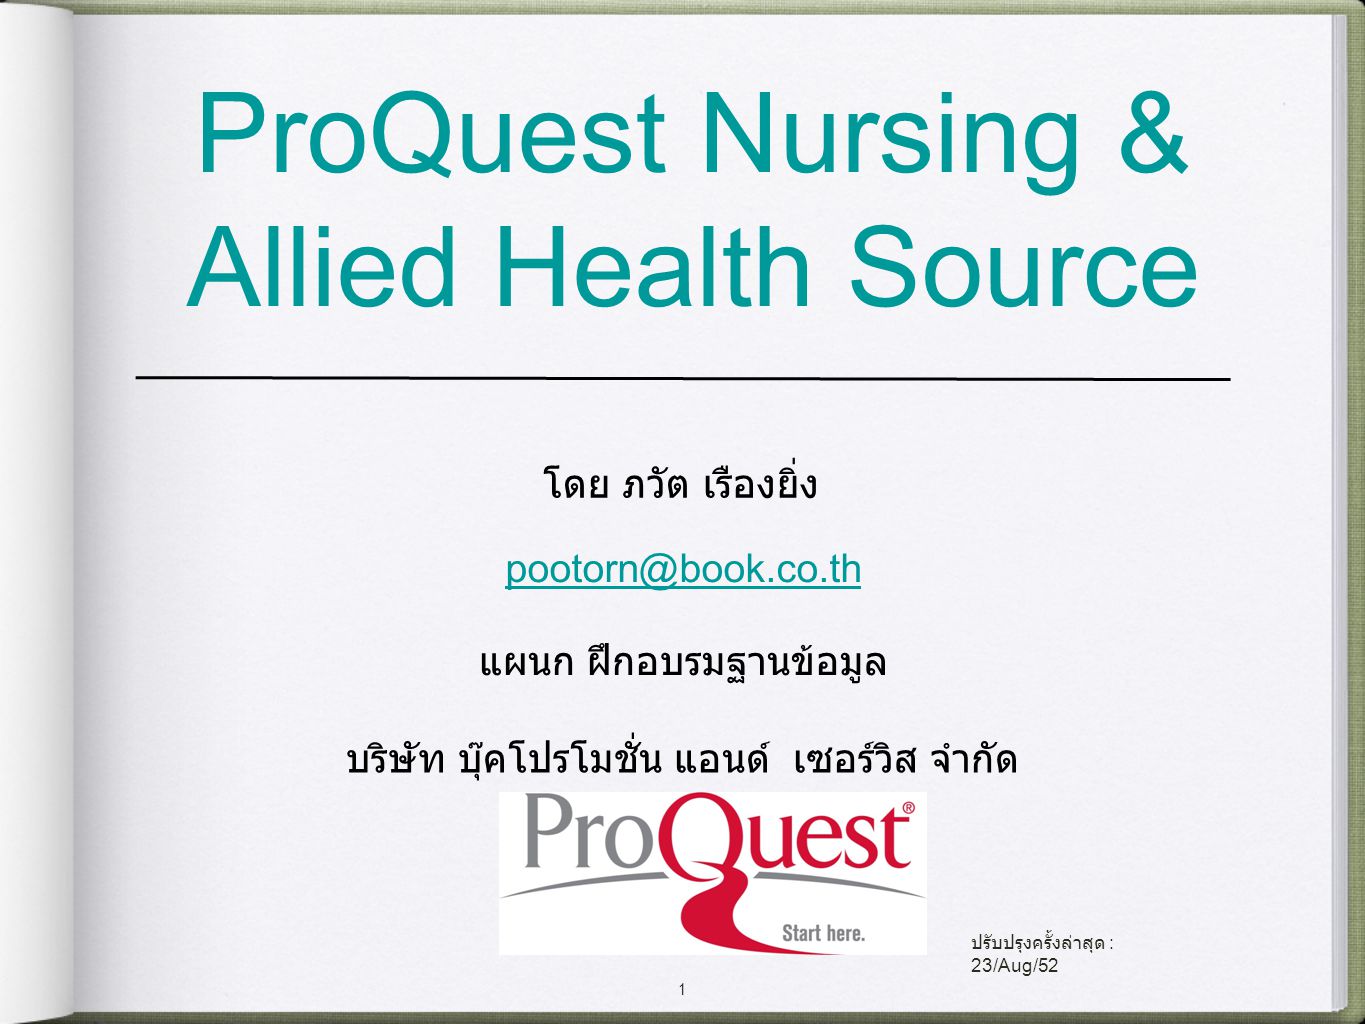 1 ProQuest Nursing & Allied Health Source โดย ภวัต เรืองยิ่ง แผนก ฝึกอบรมฐานข้อมูล บริษัท บุ๊คโปรโมชั่น แอนด์ เซอร์วิส จำกัด ปรับปรุงครั้งล่าสุด : 23/Aug/52